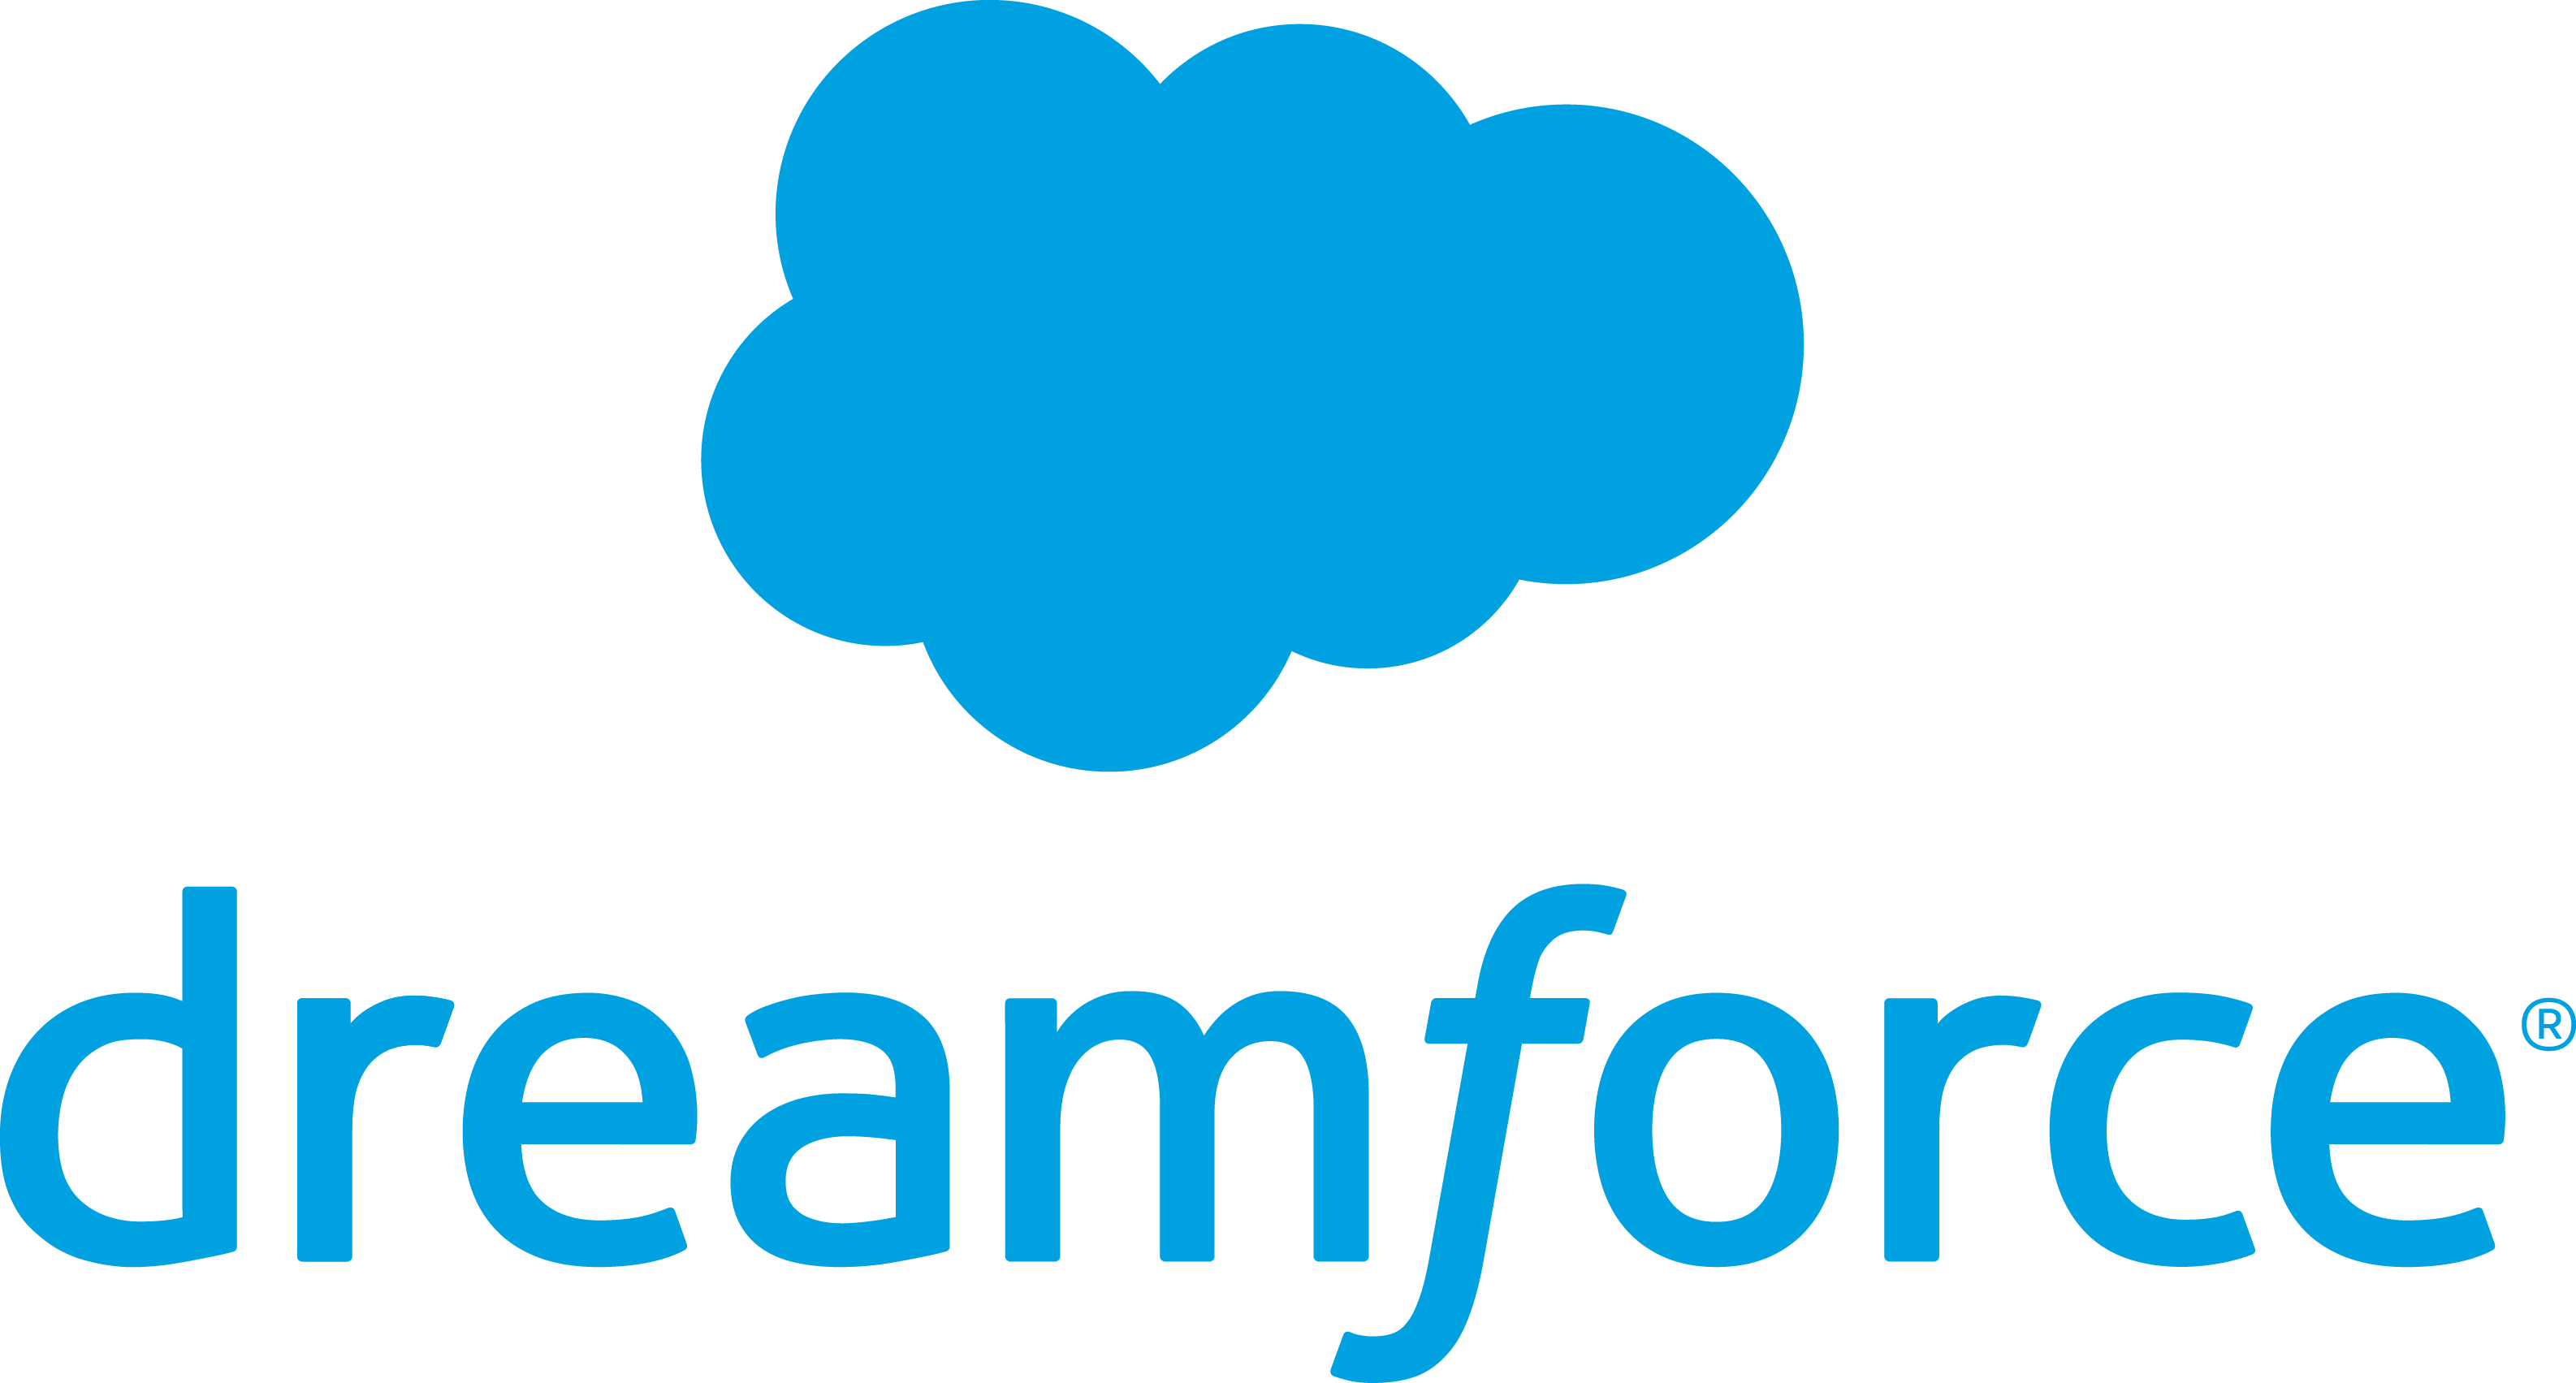 Salesforce Logo Vector